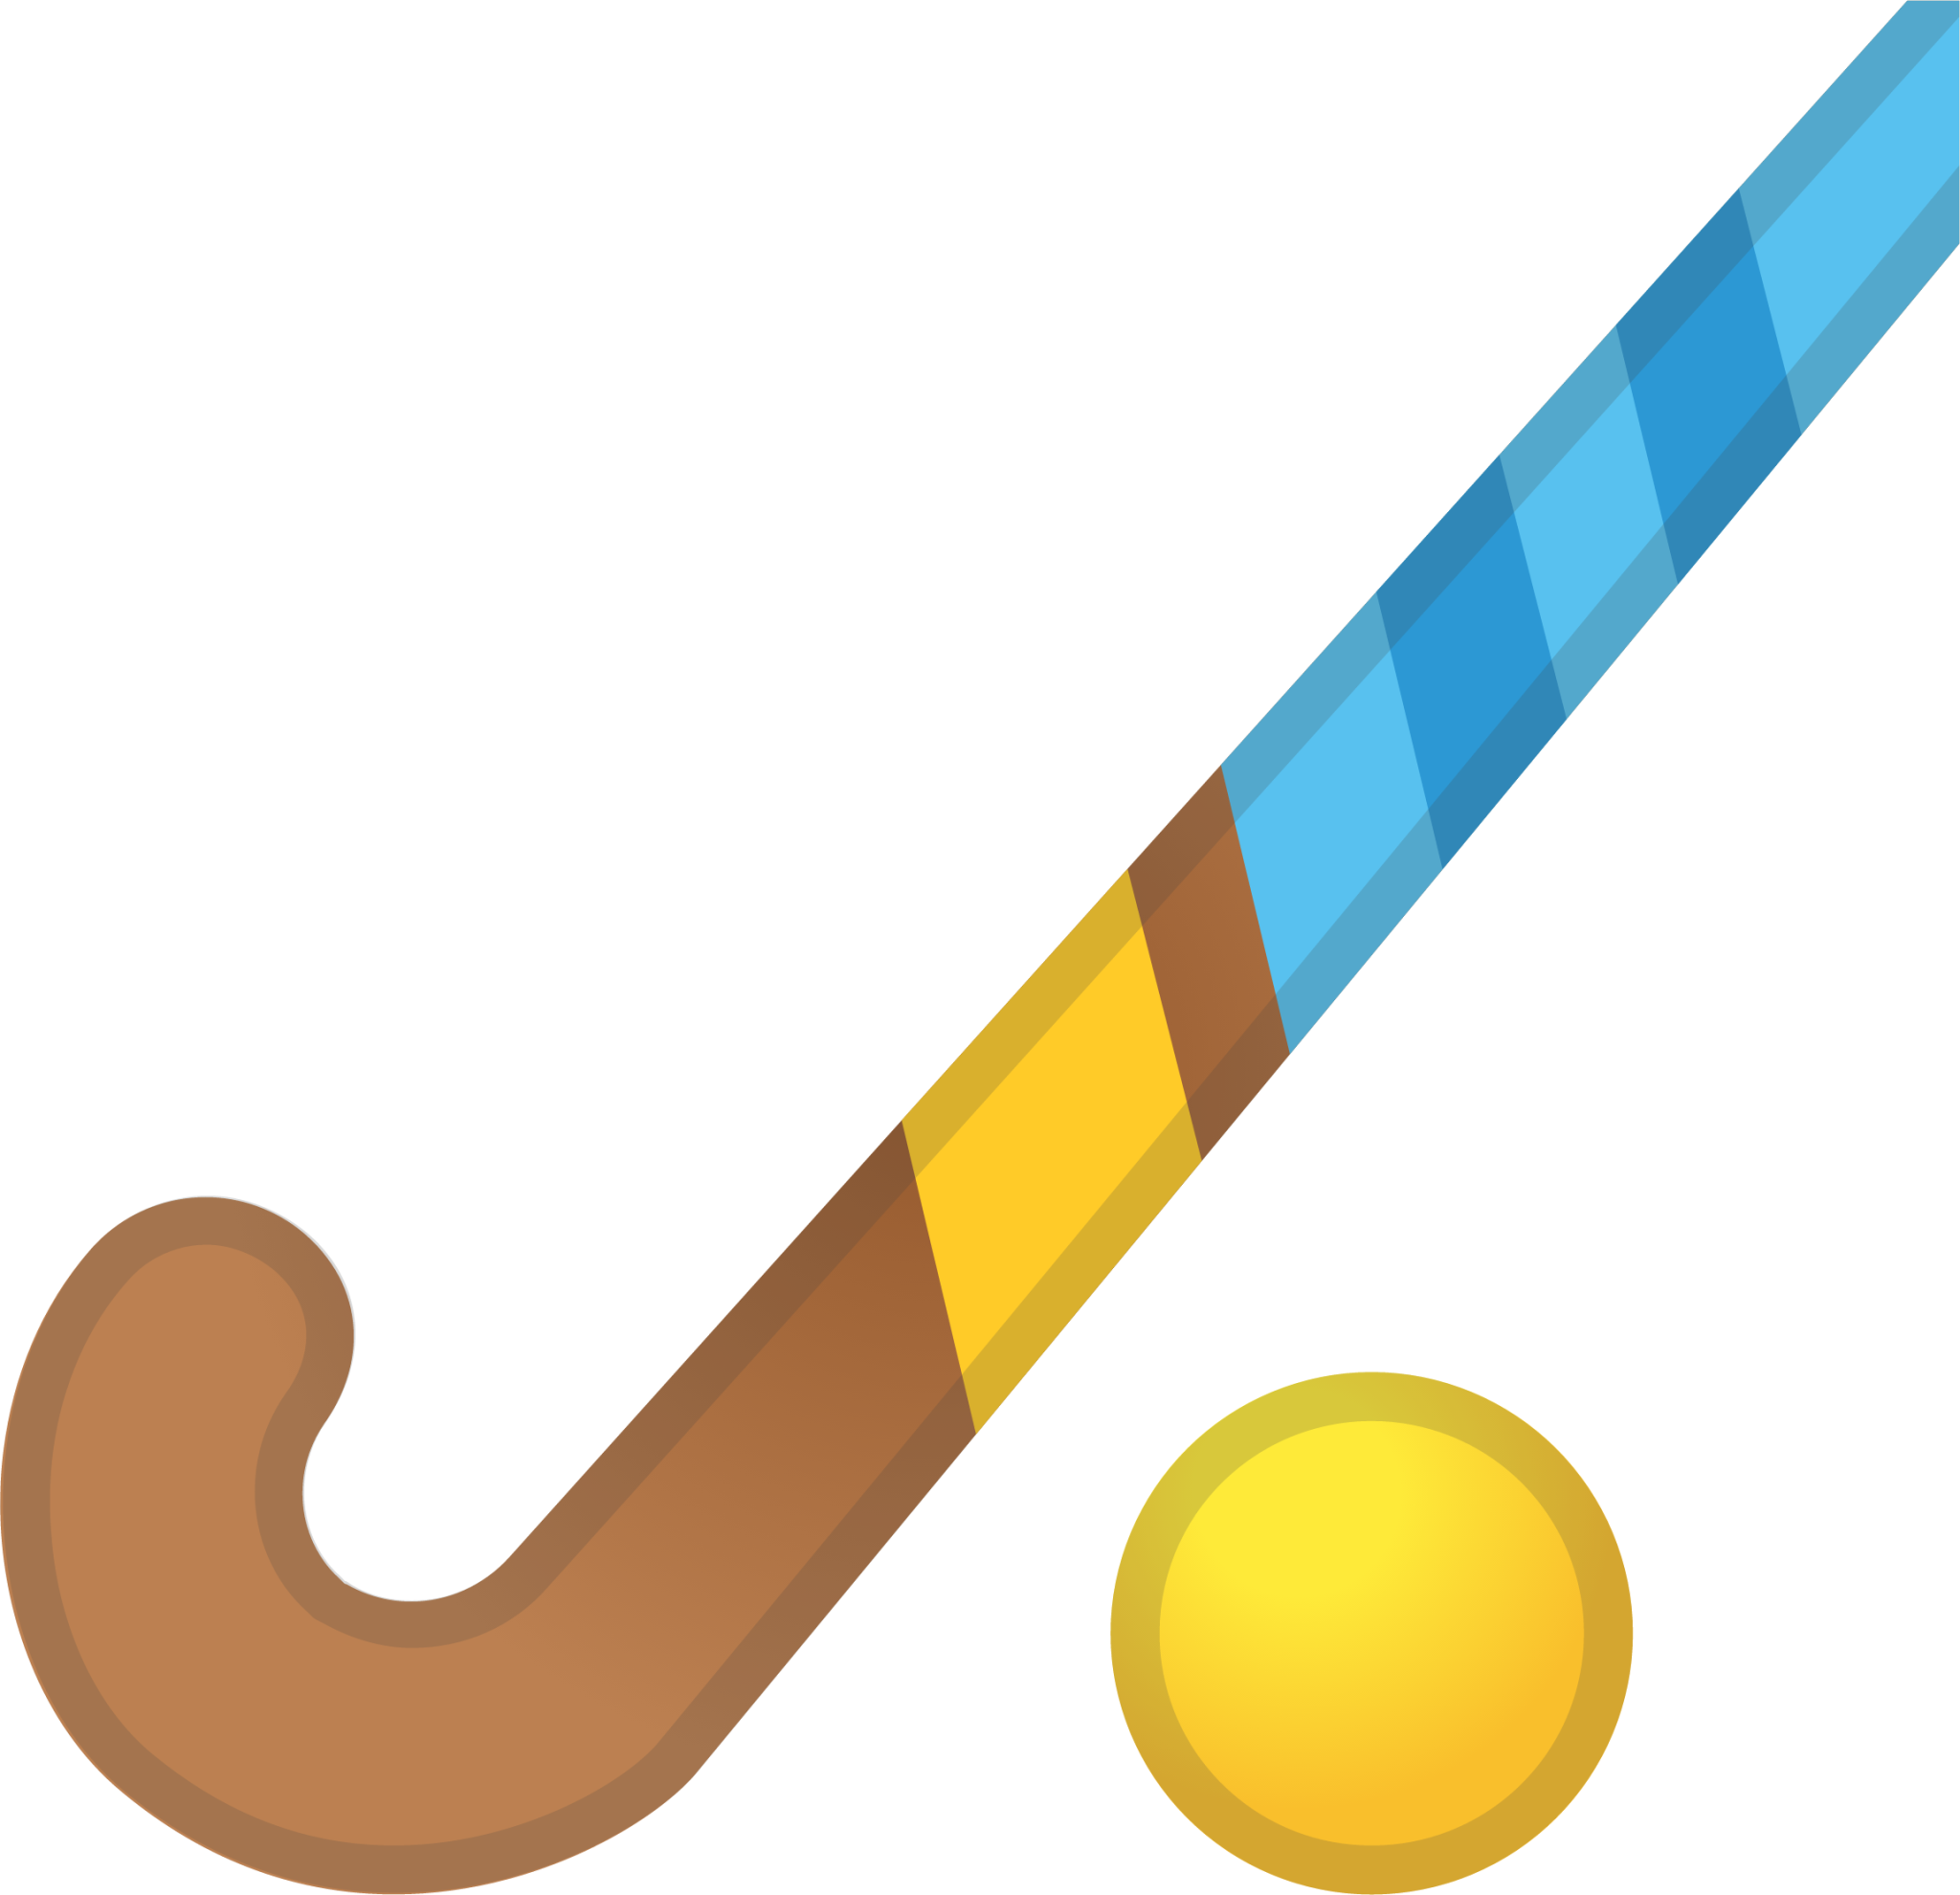 field hockey sticks clipart